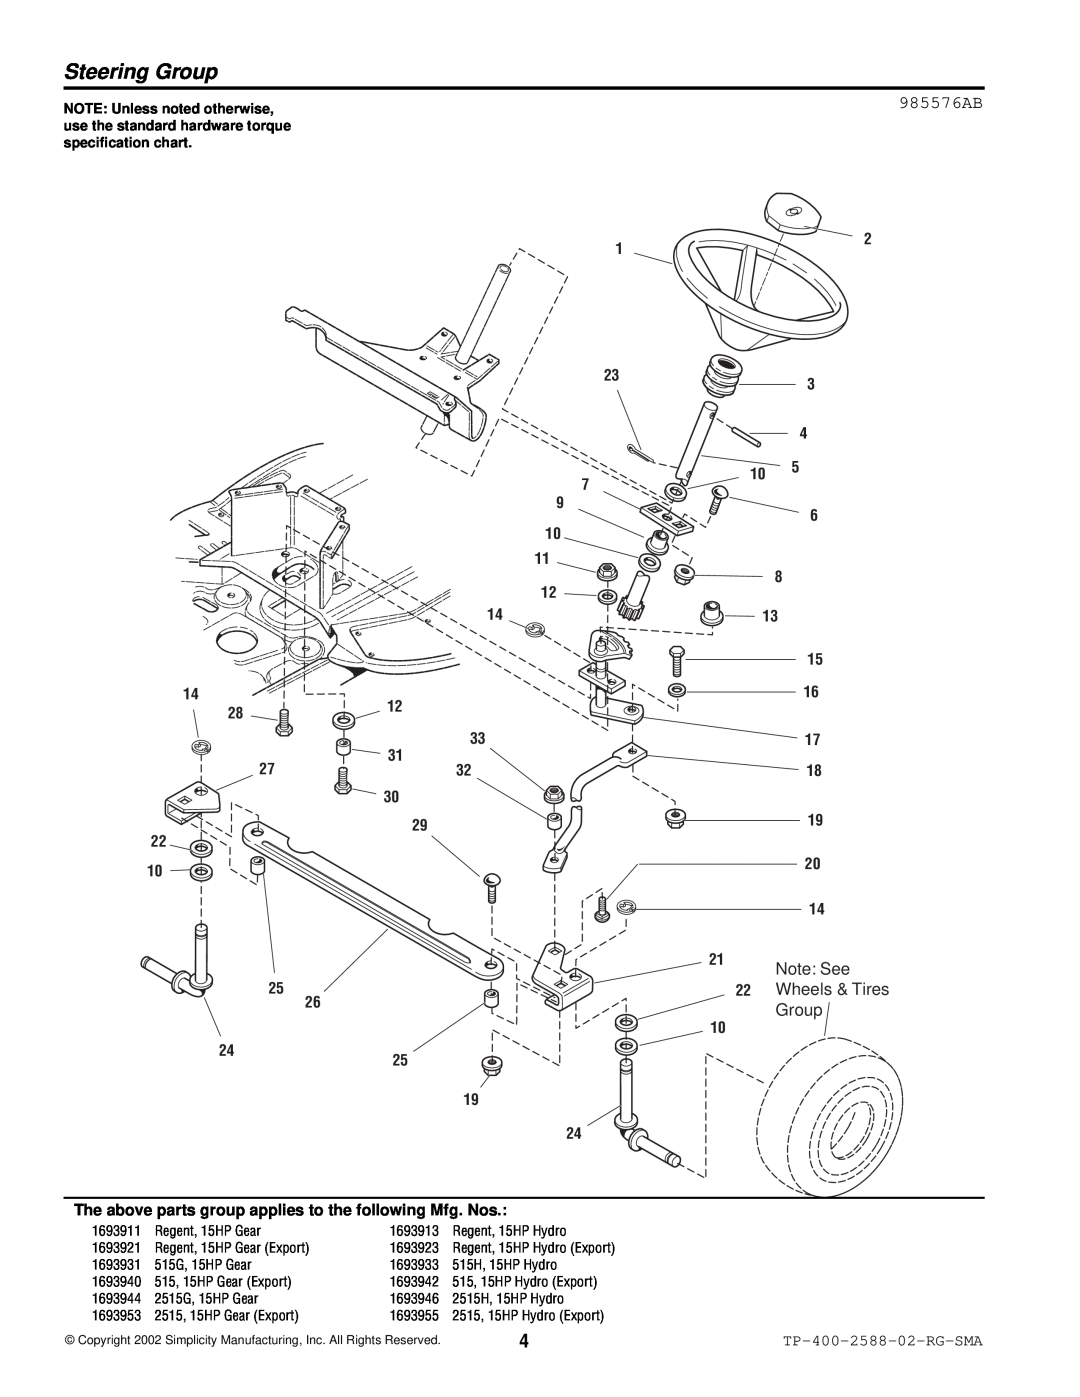 Simplicity 500 Series manual Steering Group, 985576AB, Note See, Wheels & Tires, TP-400-2588-02-RG-SMA 